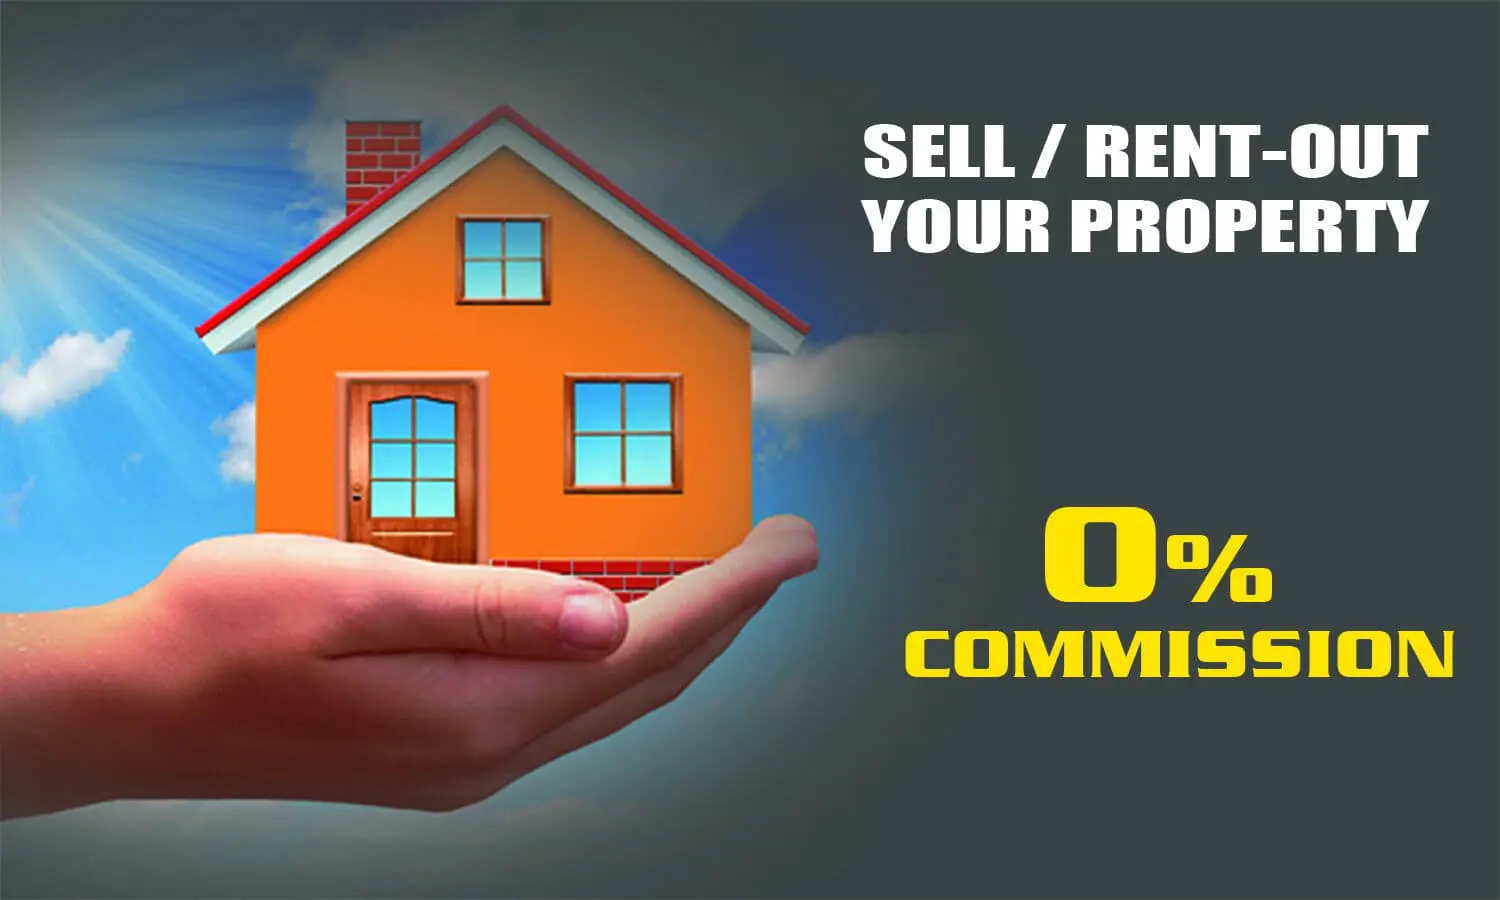 Sale property online